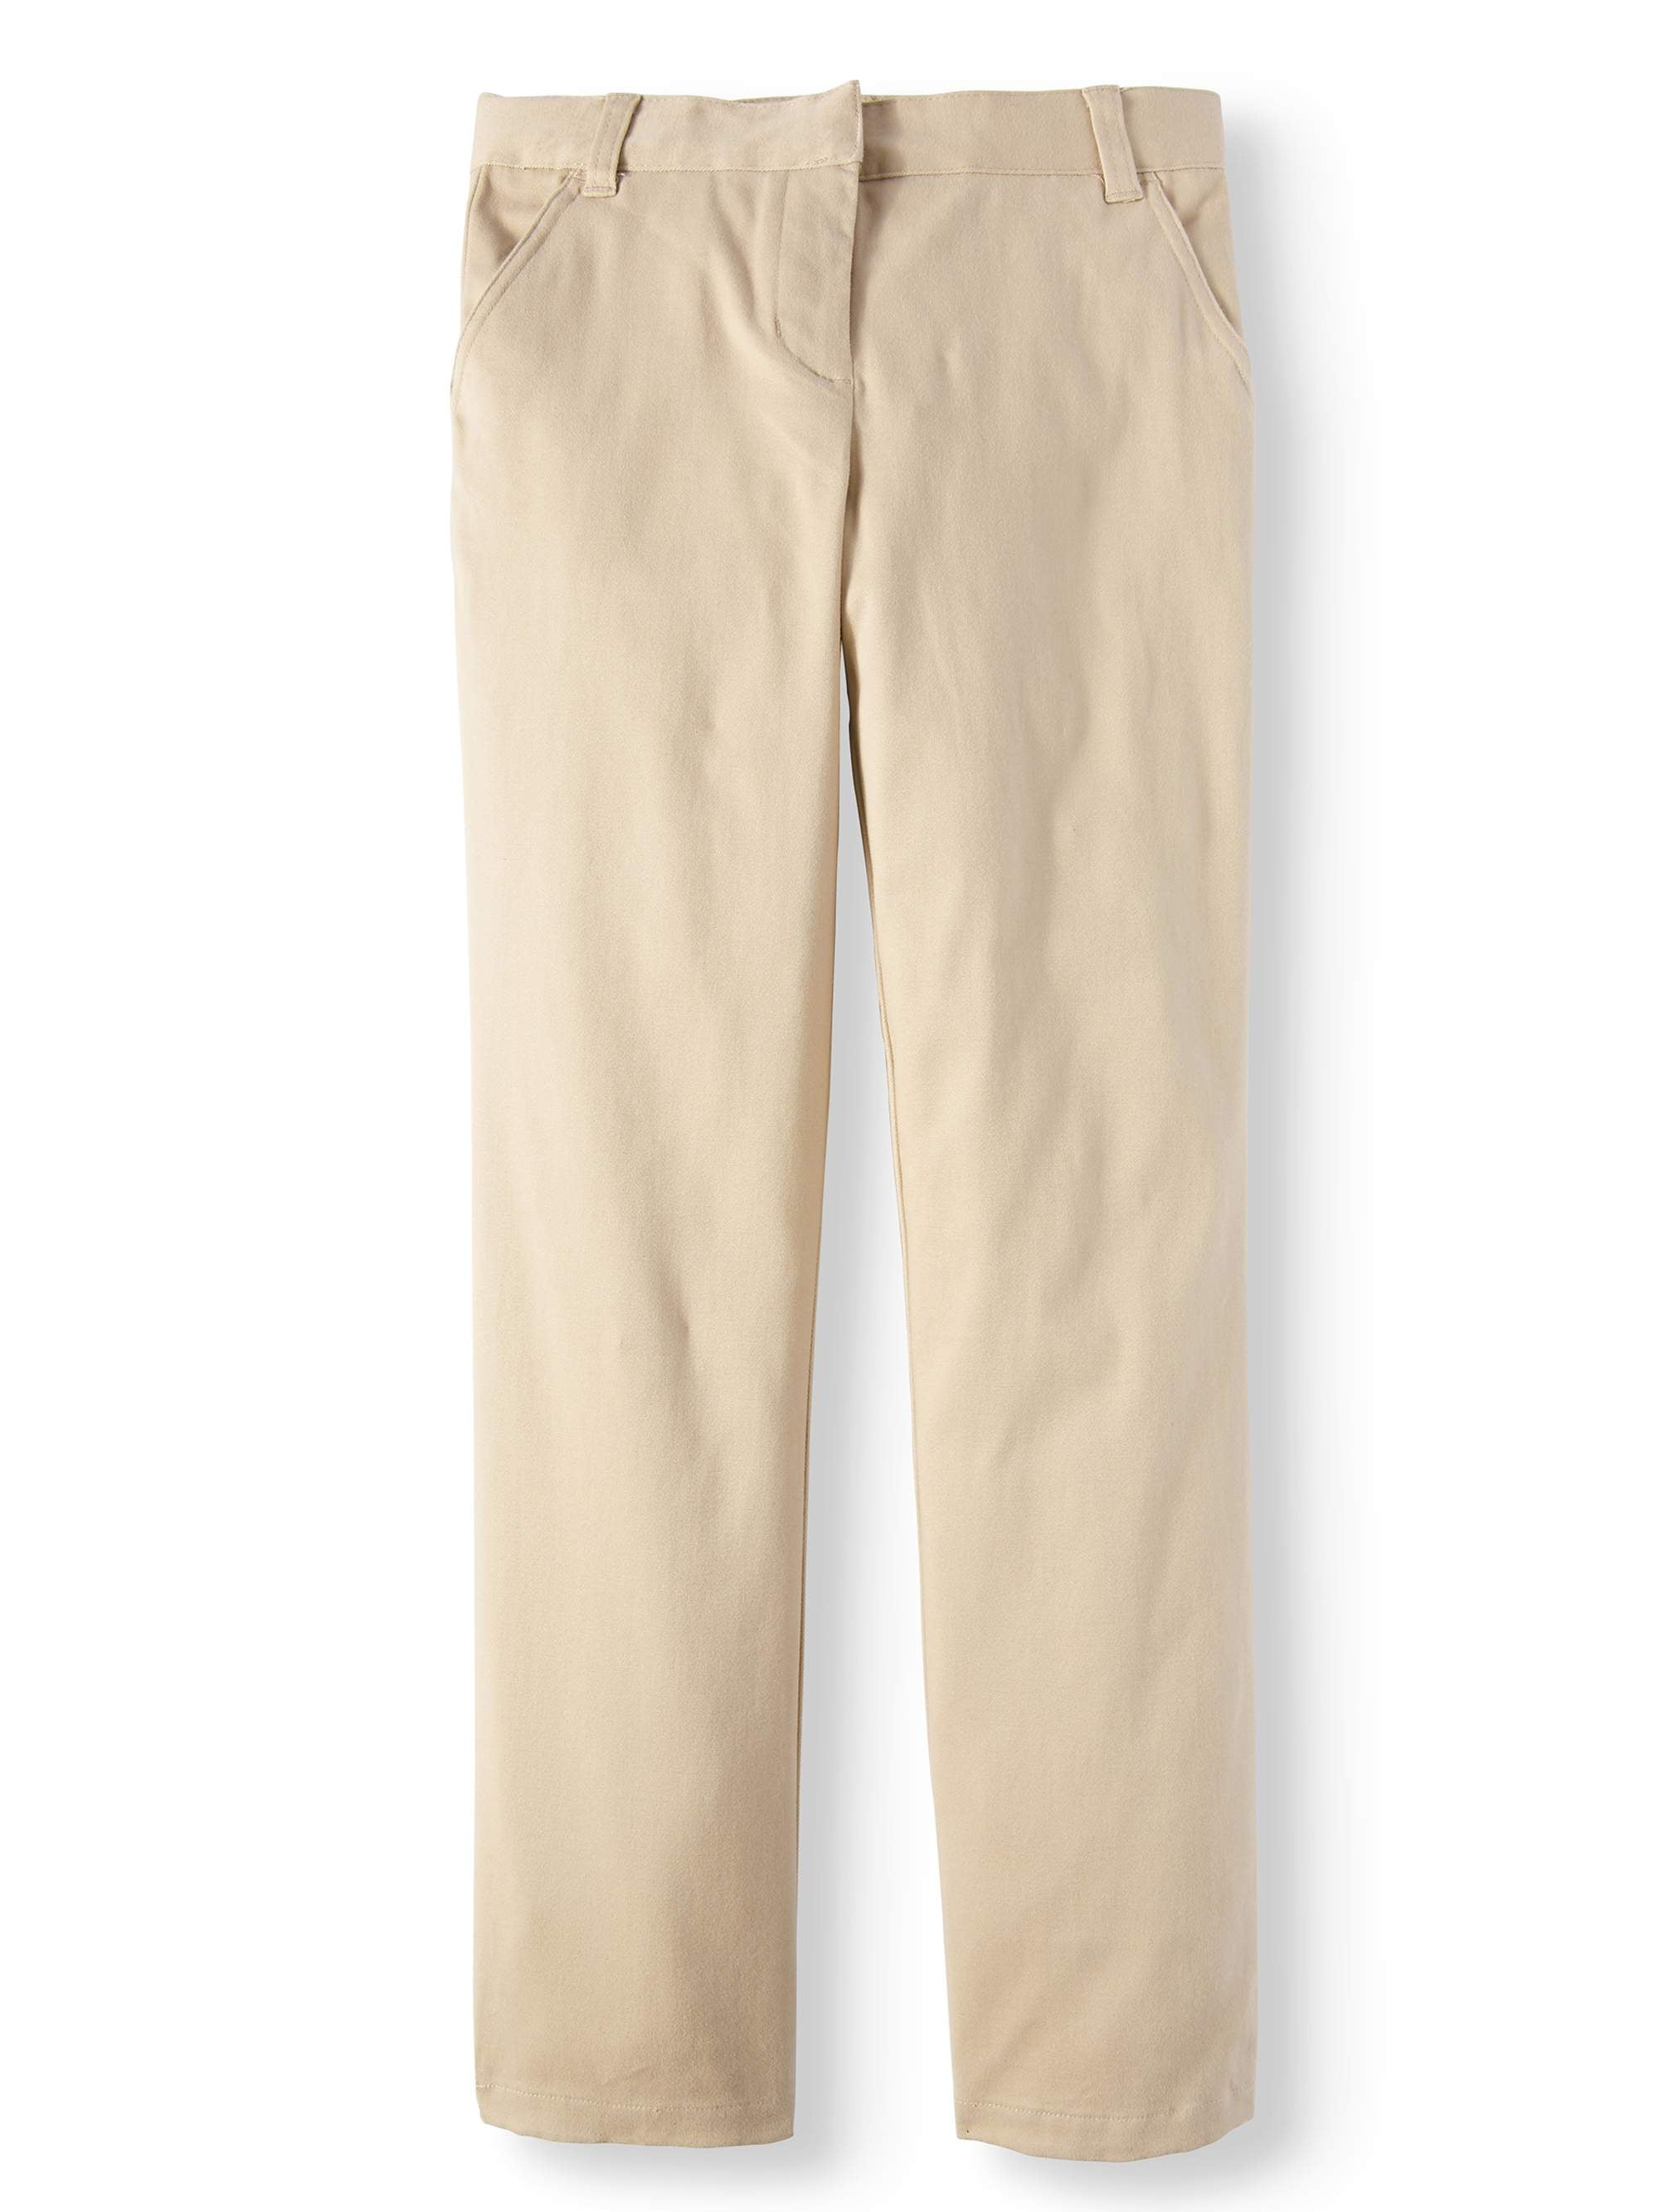 Keuka Outlet - George Girls School Uniform Flat Front Pants